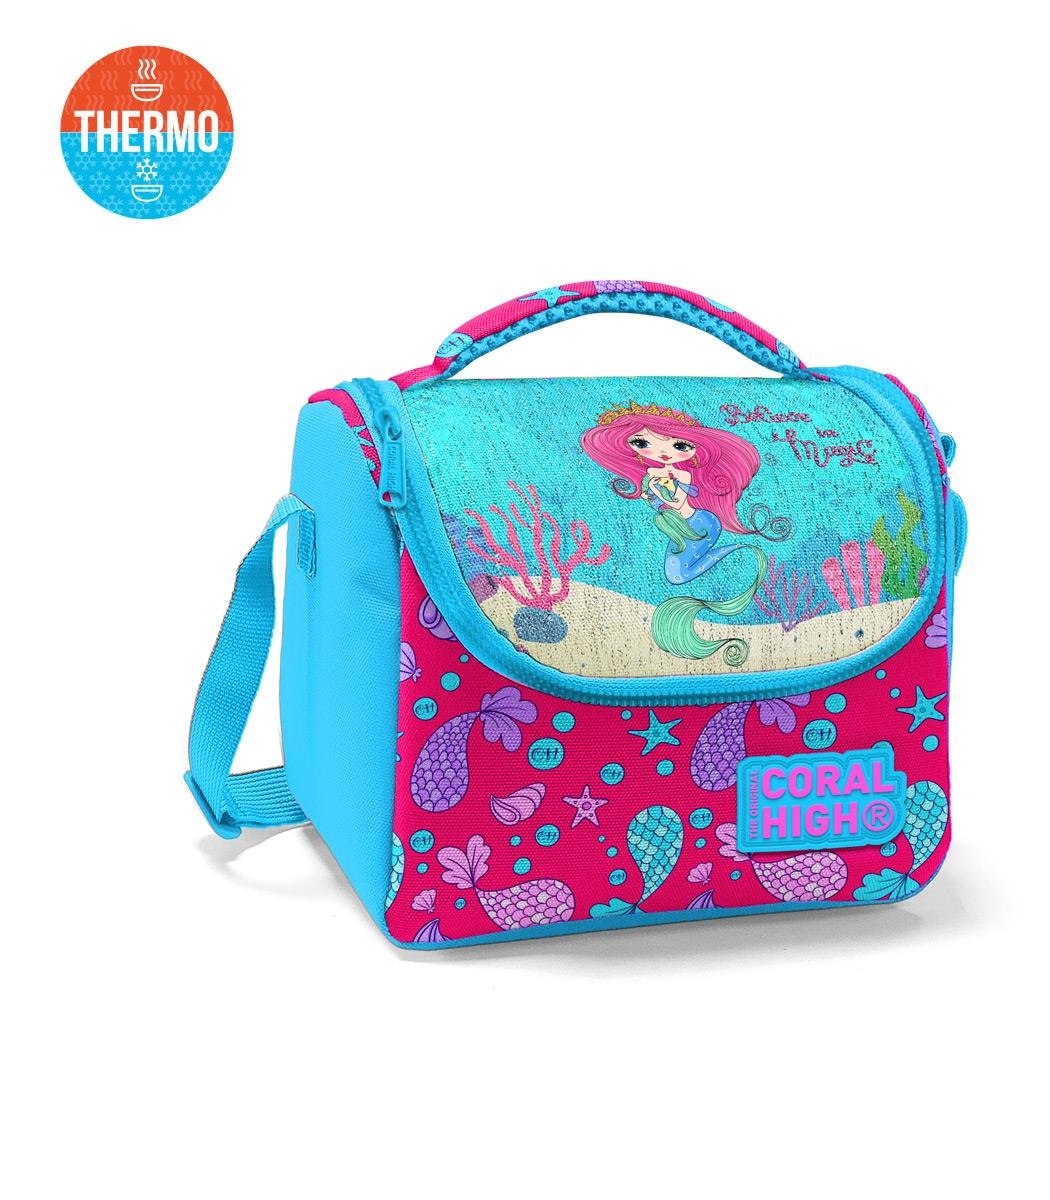 Coral High Kids Thermal Lunch Bag - Blue Pink Mermaid Pattern